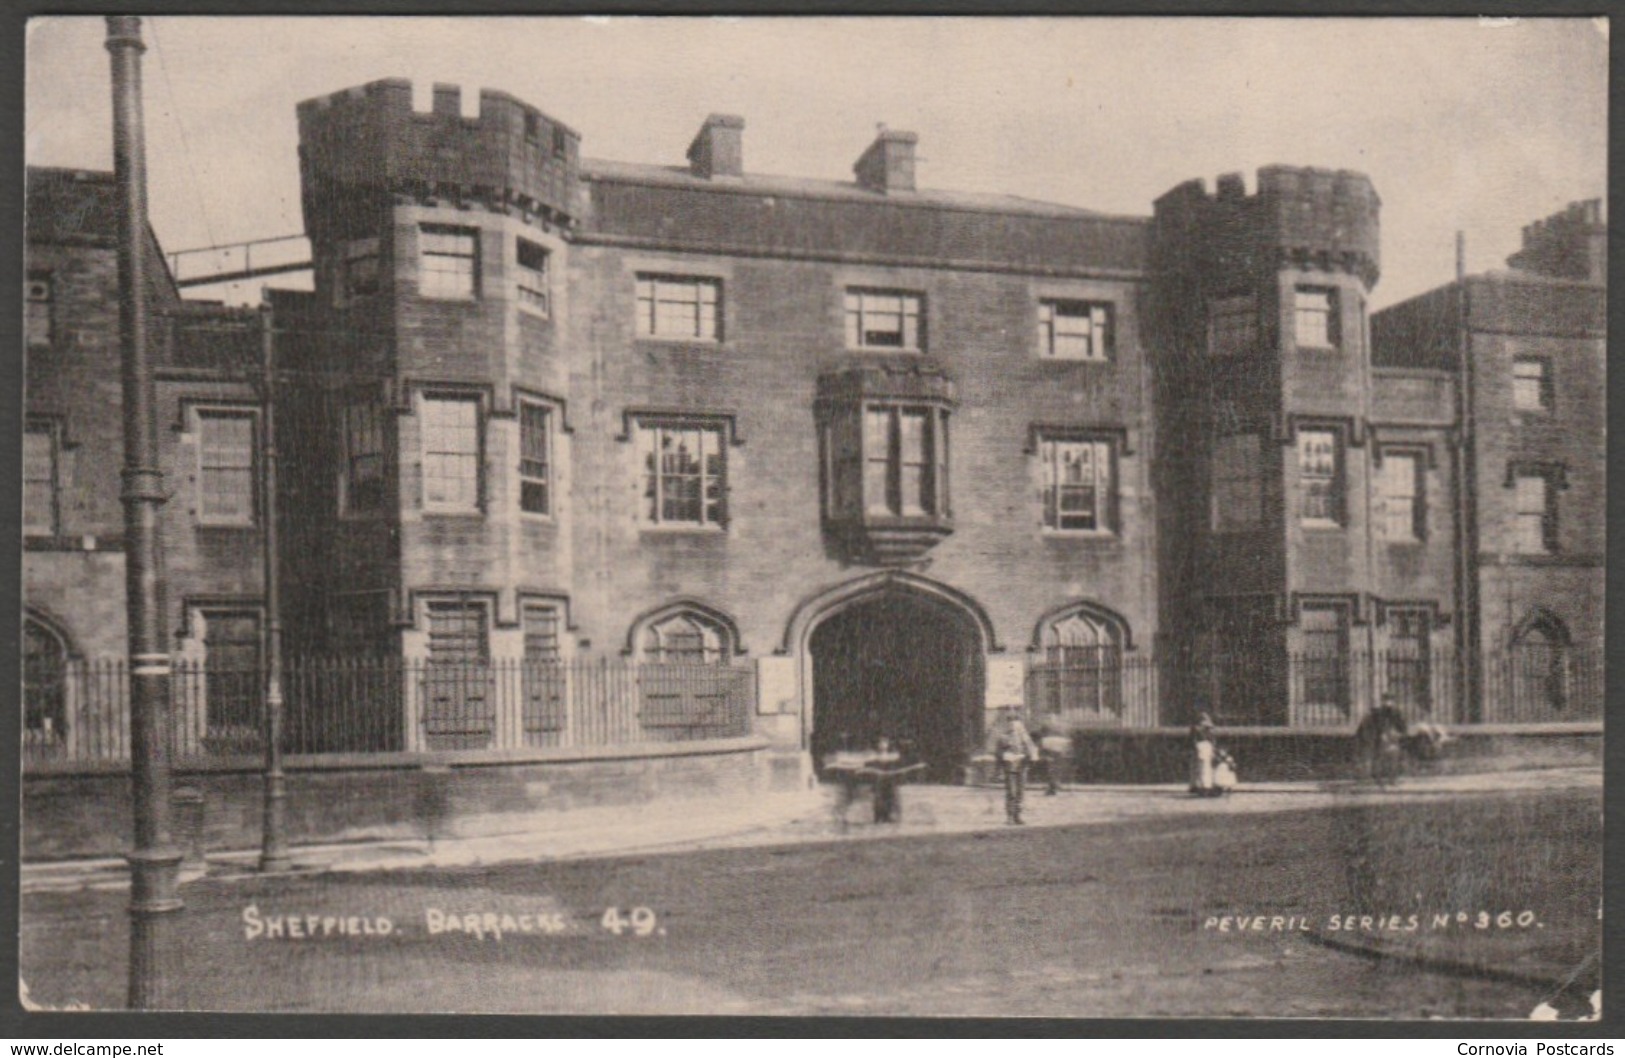 Hillsborough Barracks, Sheffield, Yorkshire, C.1905-10 - Peveril Series Postcard - Sheffield